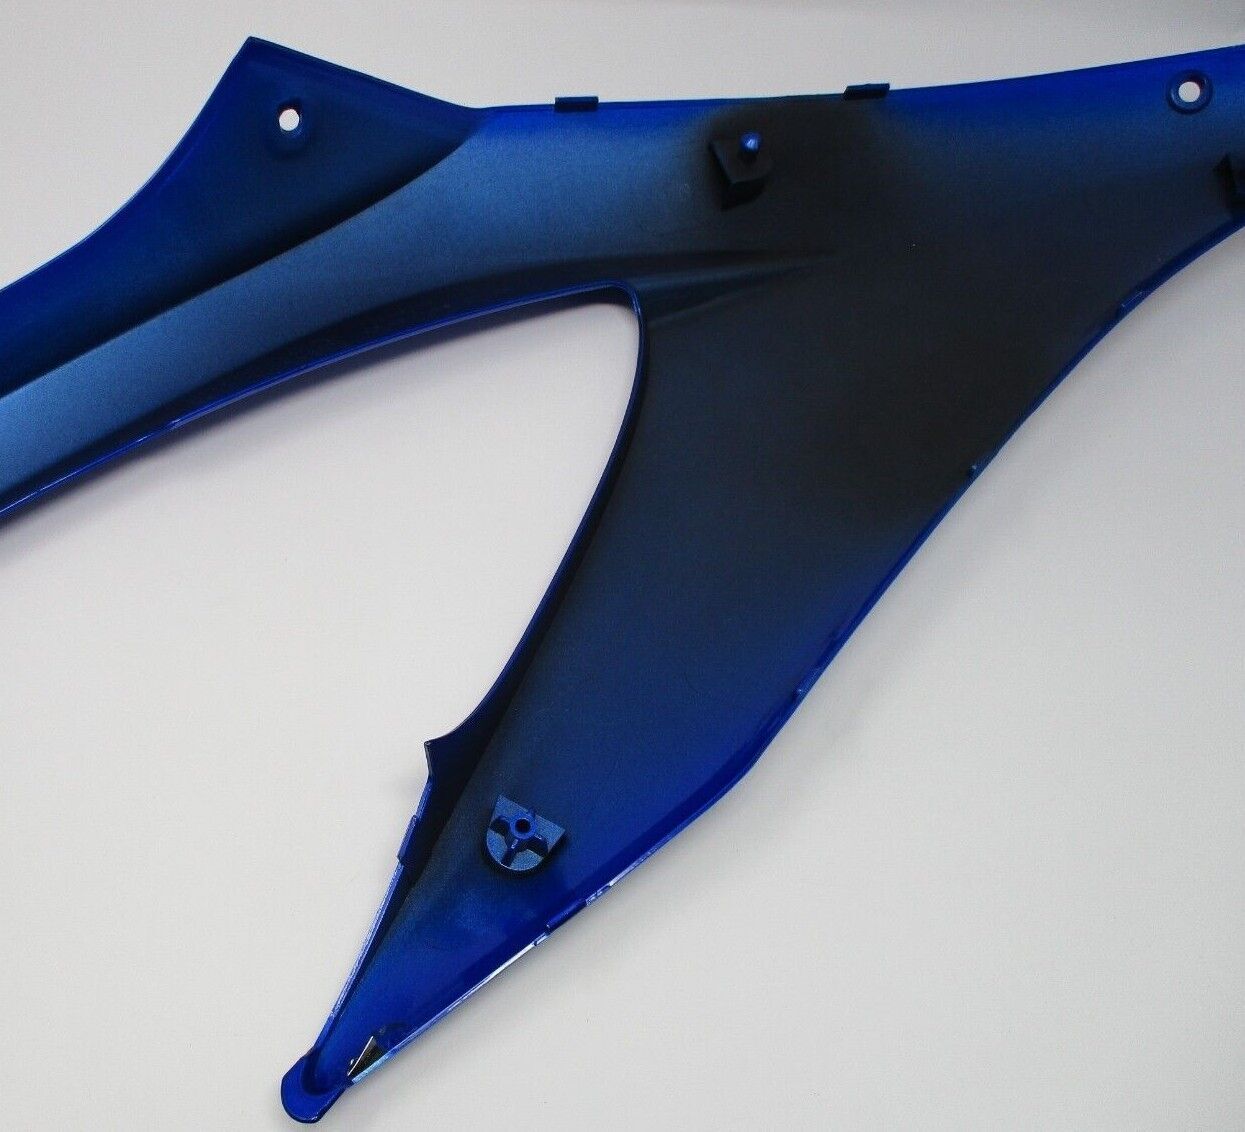 Suzuki OEM Blue Left Cowling for '08 GSX-R750 94440-38H00-YKY